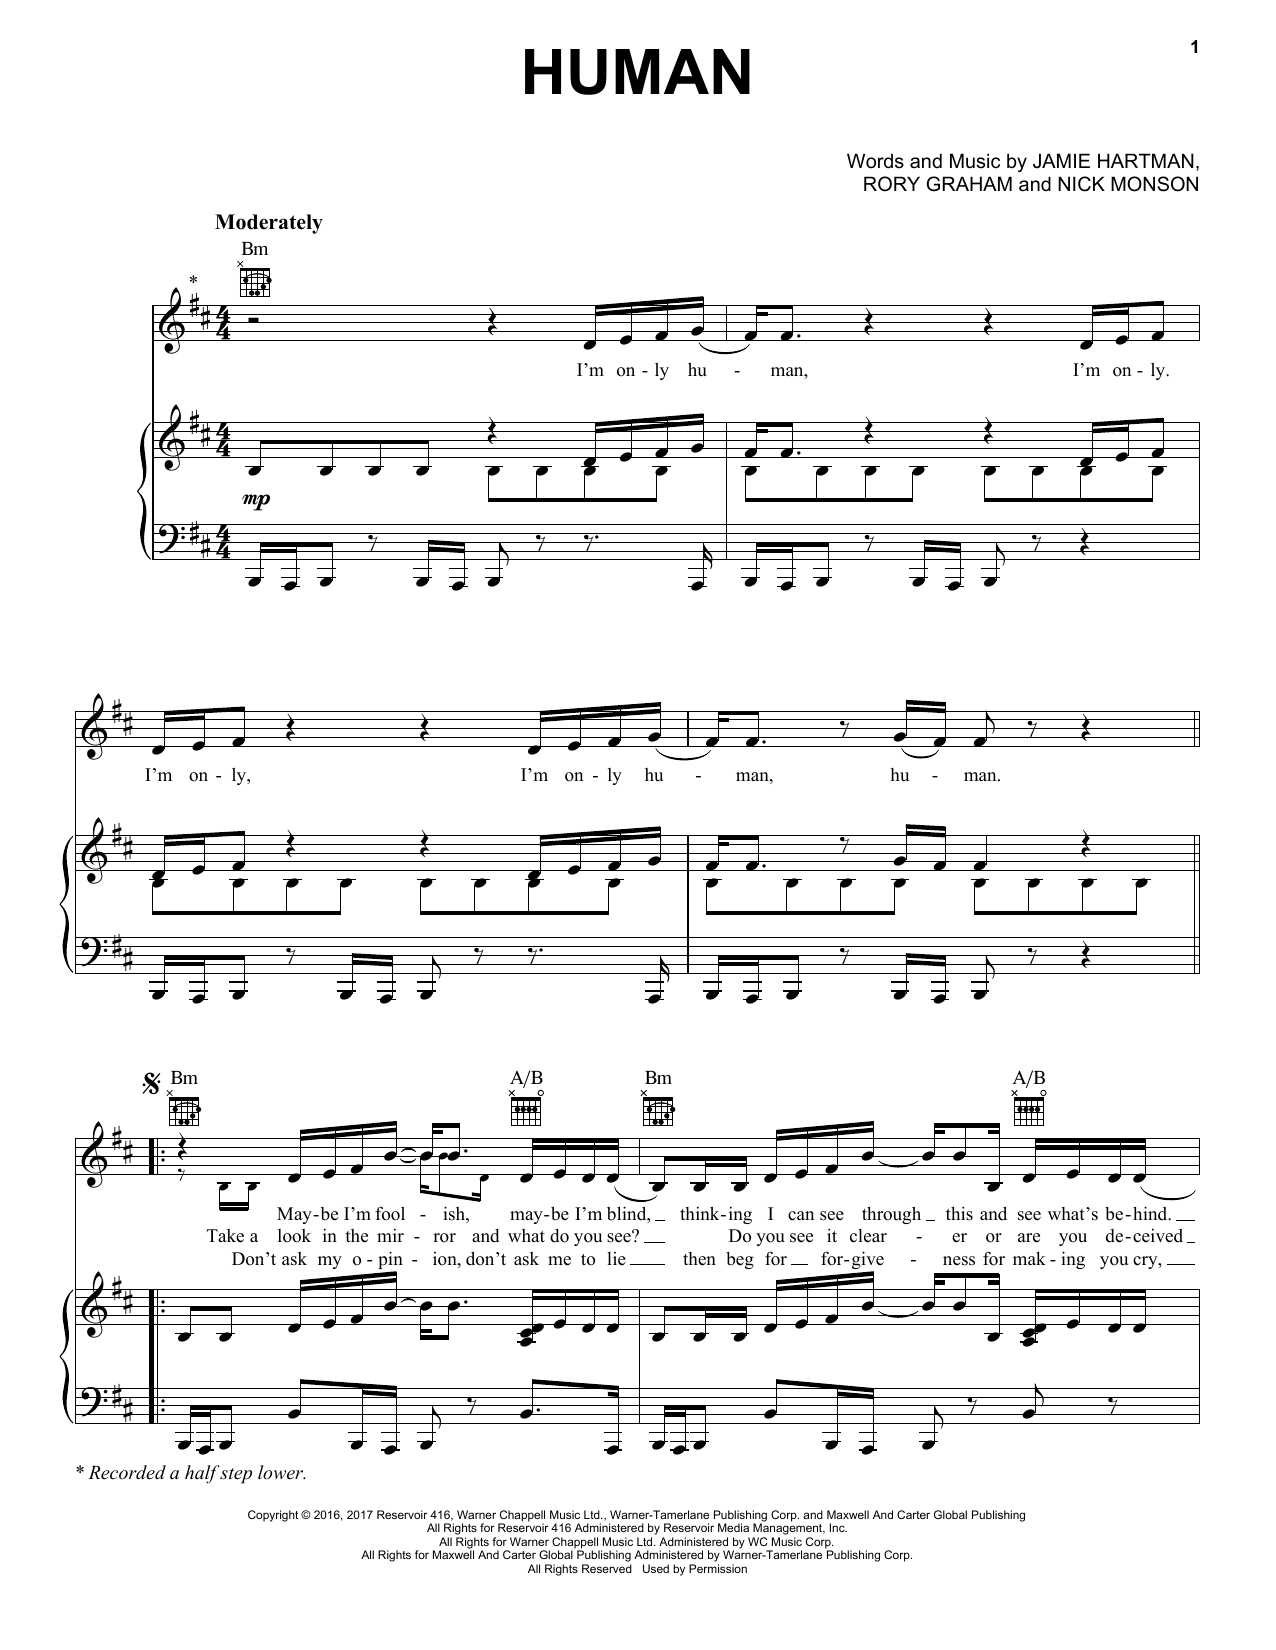 Rag 'n' Bone Man Human Sheet Music Notes & Chords for Piano, Vocal & Guitar (Right-Hand Melody) - Download or Print PDF